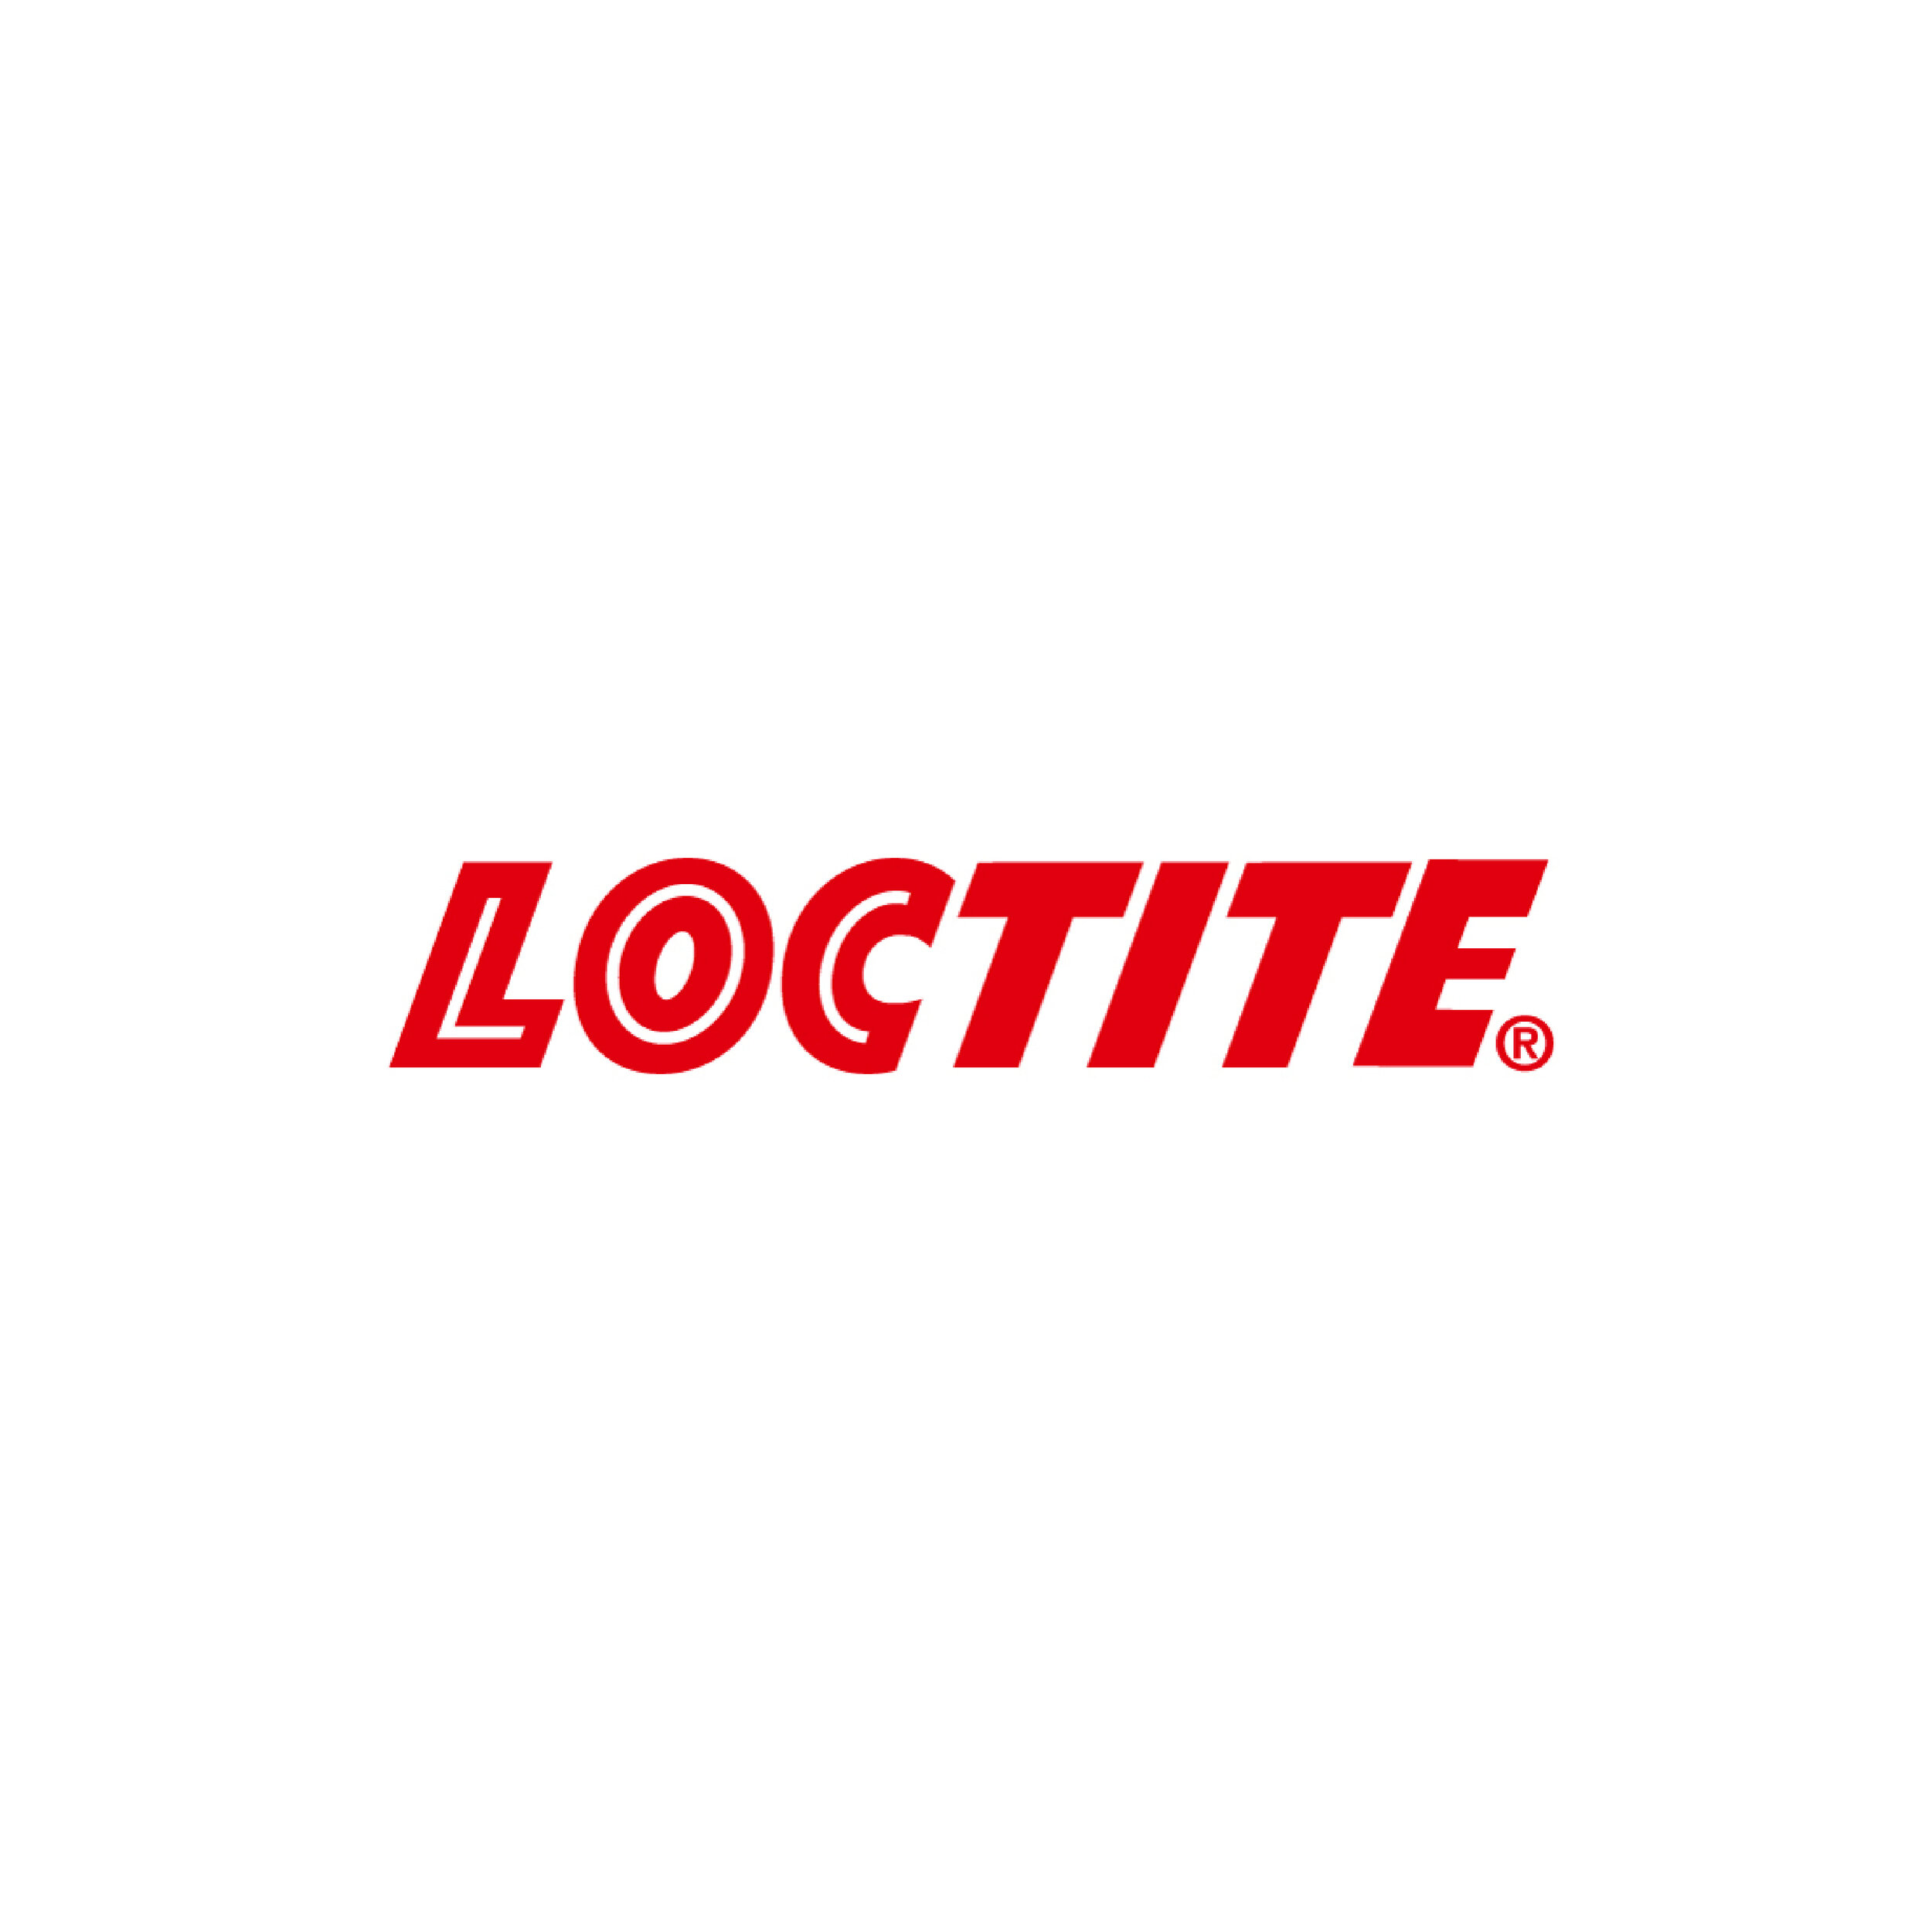 Loctite-Logo.jpg